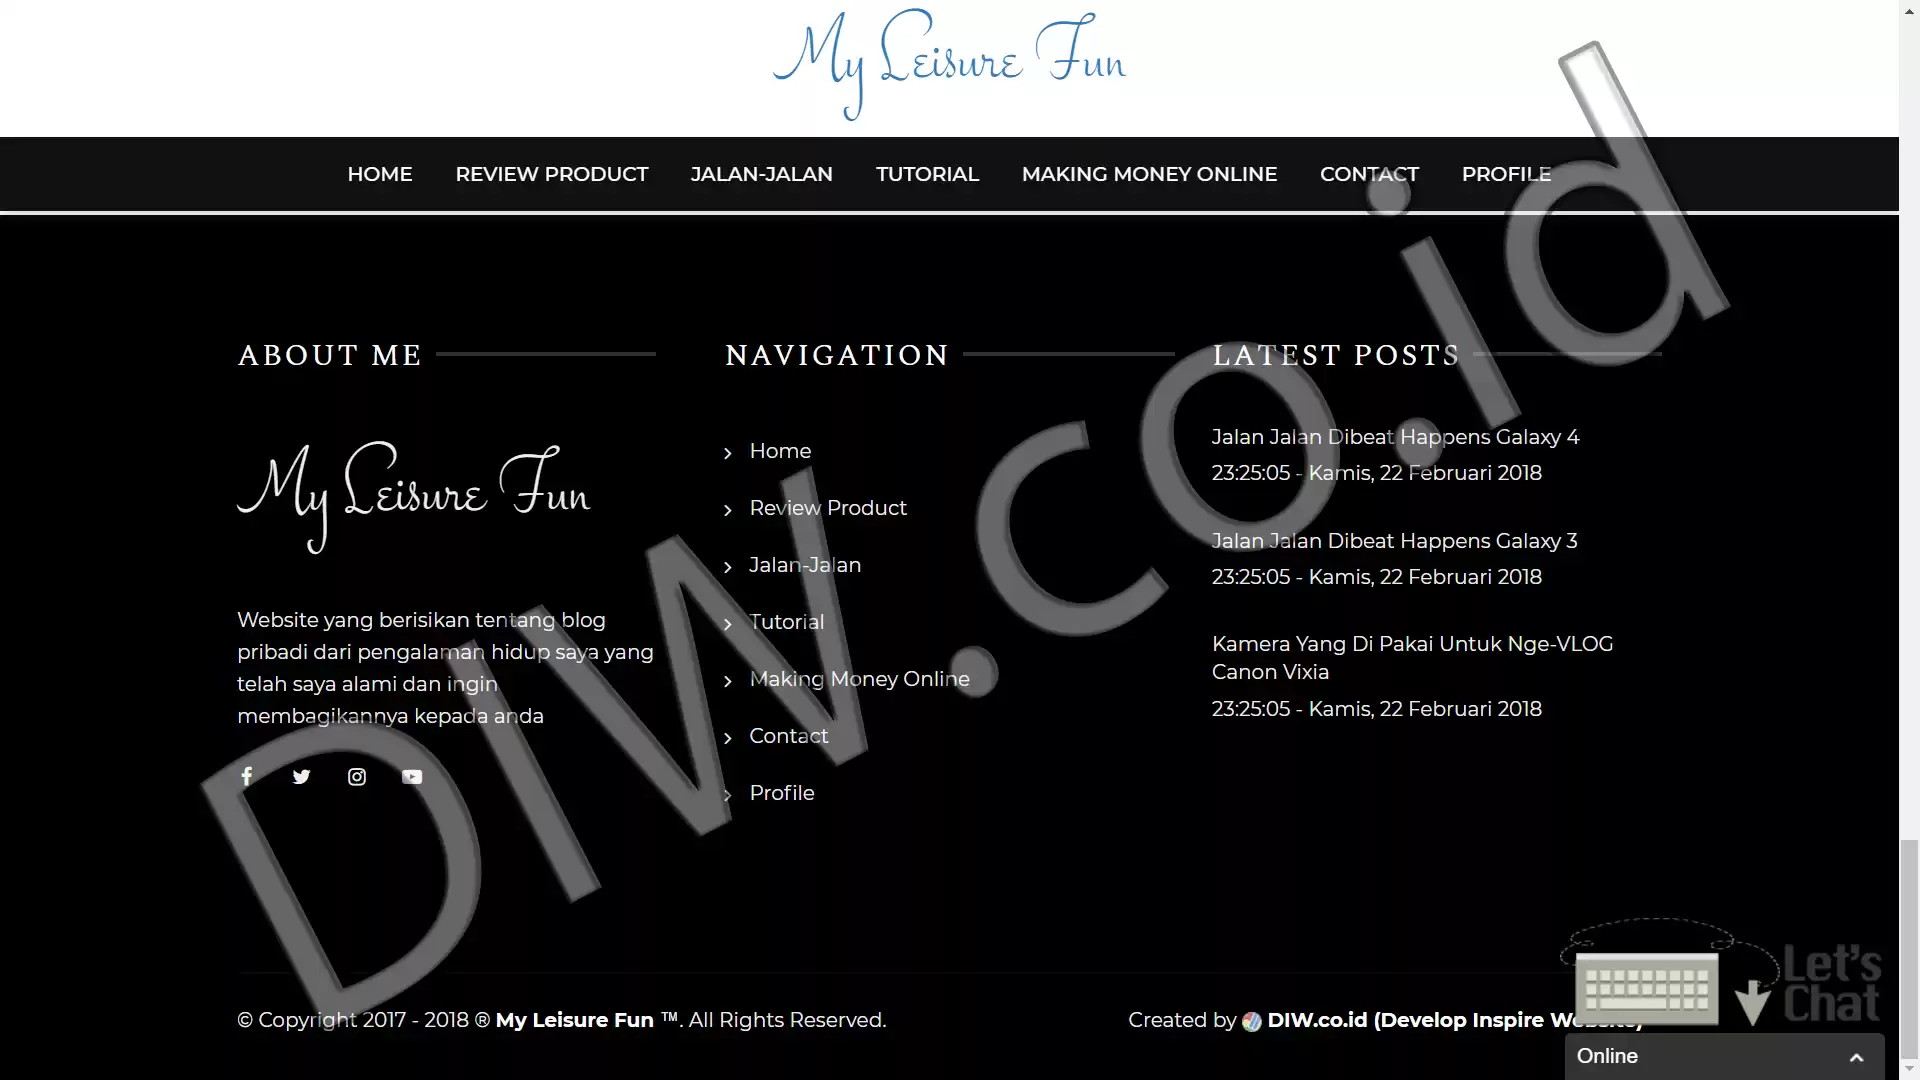 Portfolio - My Leisure Fun - DIW.co.id (Digital In Website) Jasa Pembuatan Website dan Program Skripsi